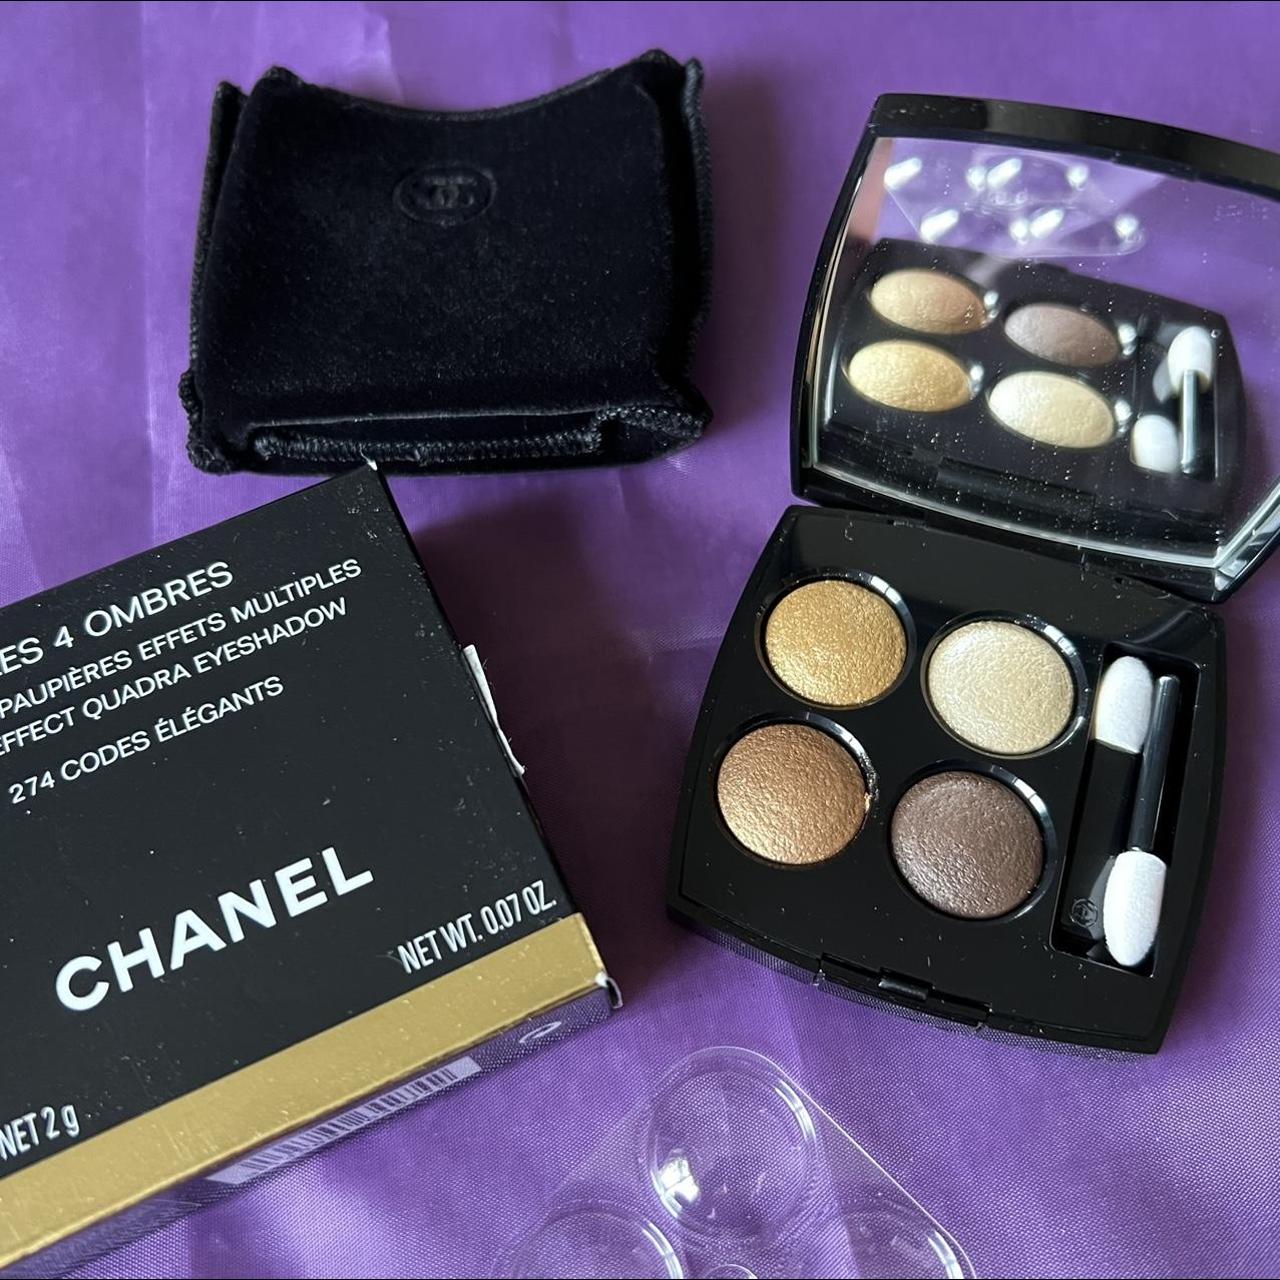 Chanel Les 4 Ombres Multi-Effect Quadra Eyeshadow - # 274 Codes Elegants  0.07 oz Eyeshadow